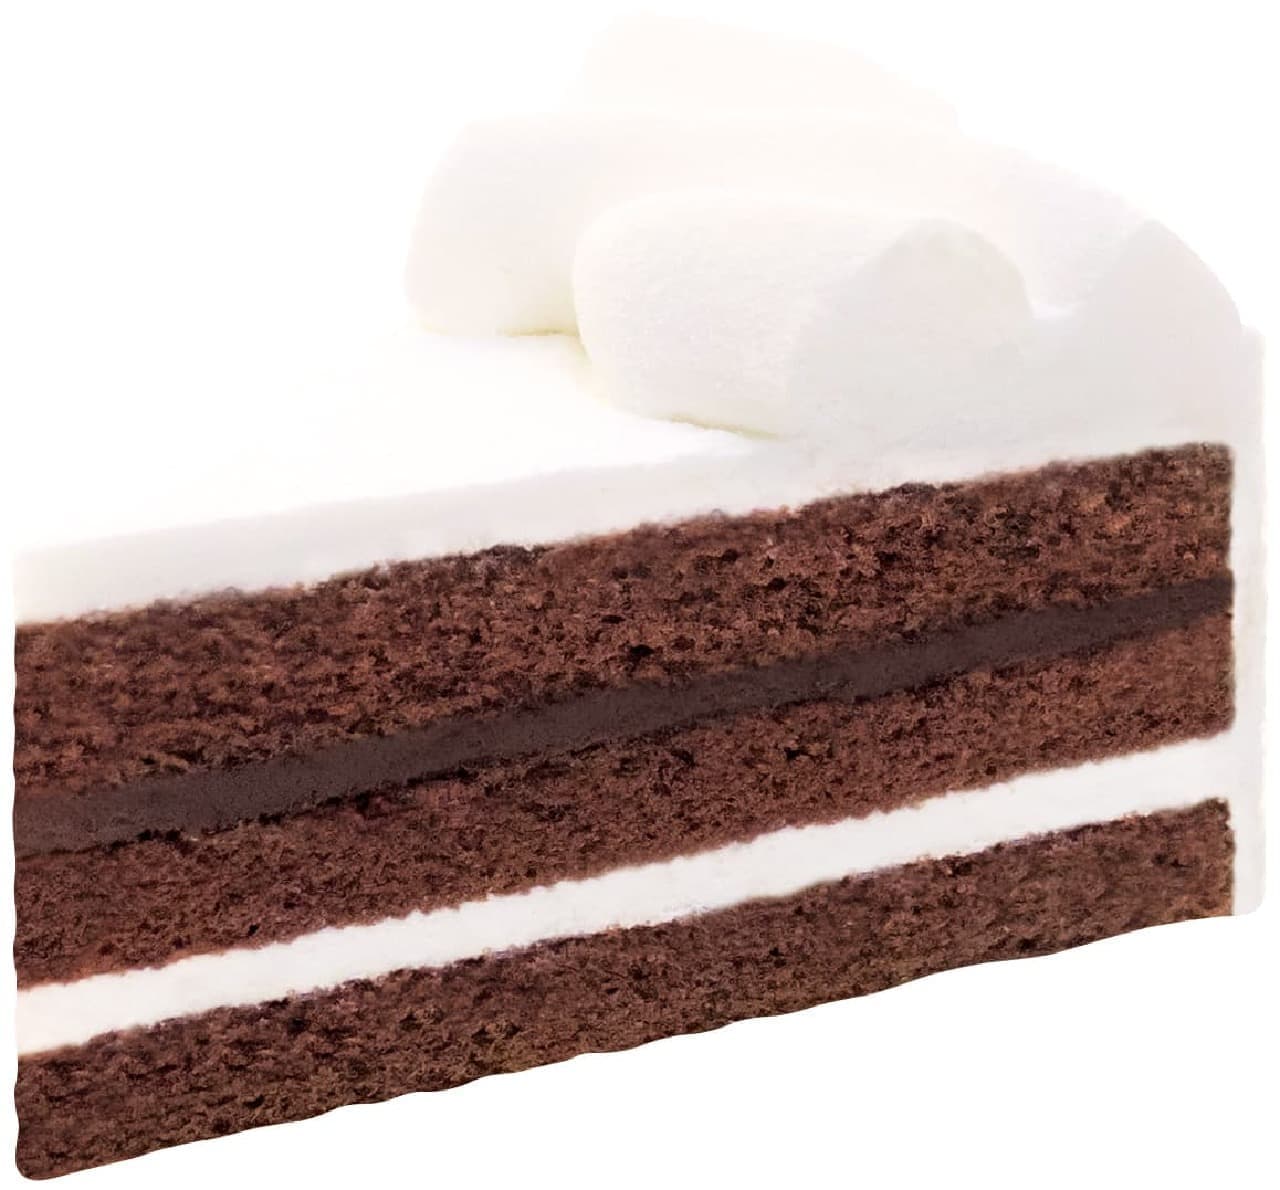 Fujiya "White Chocolate Cake" 2 pieces